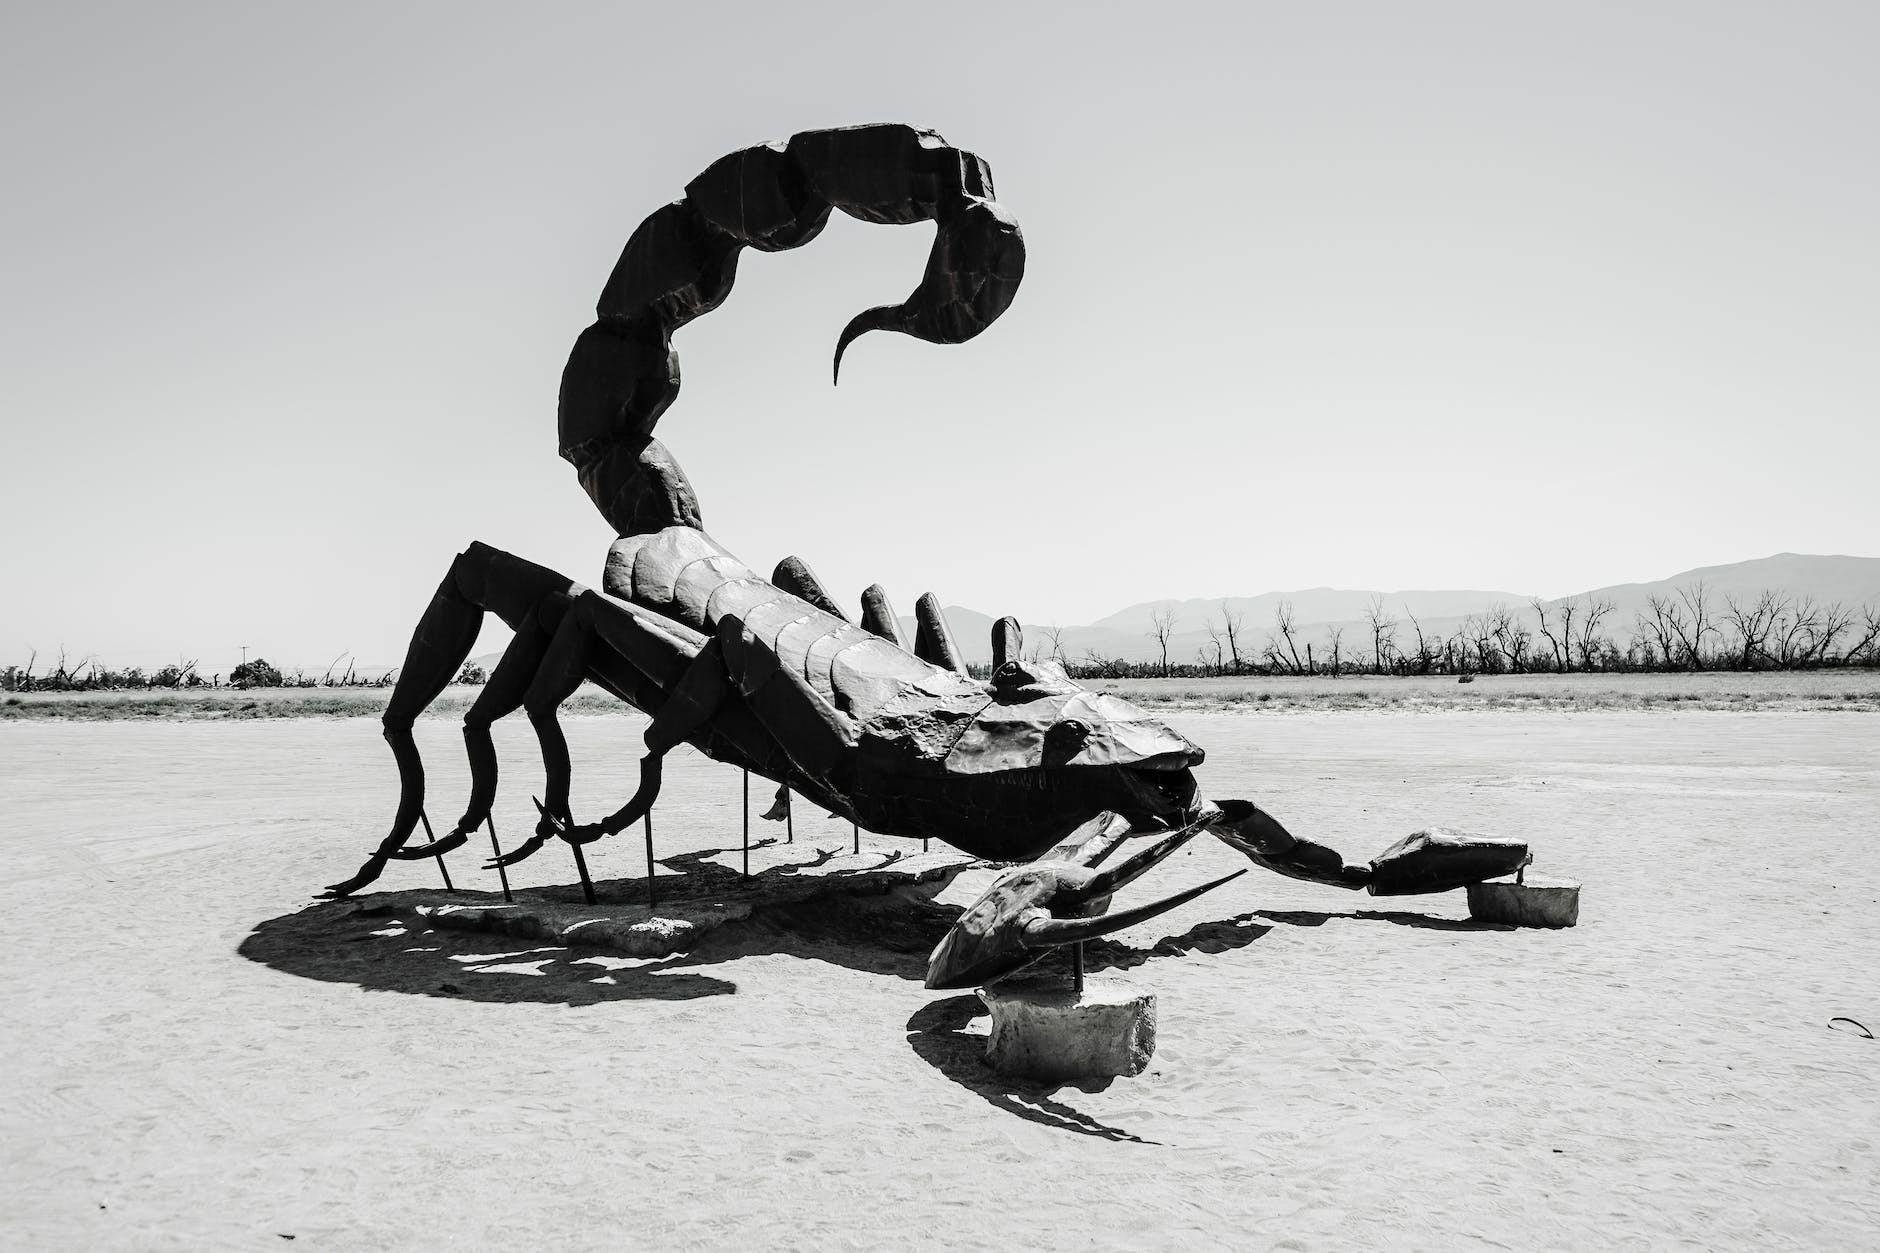 scorpion sculpture in desert landscape